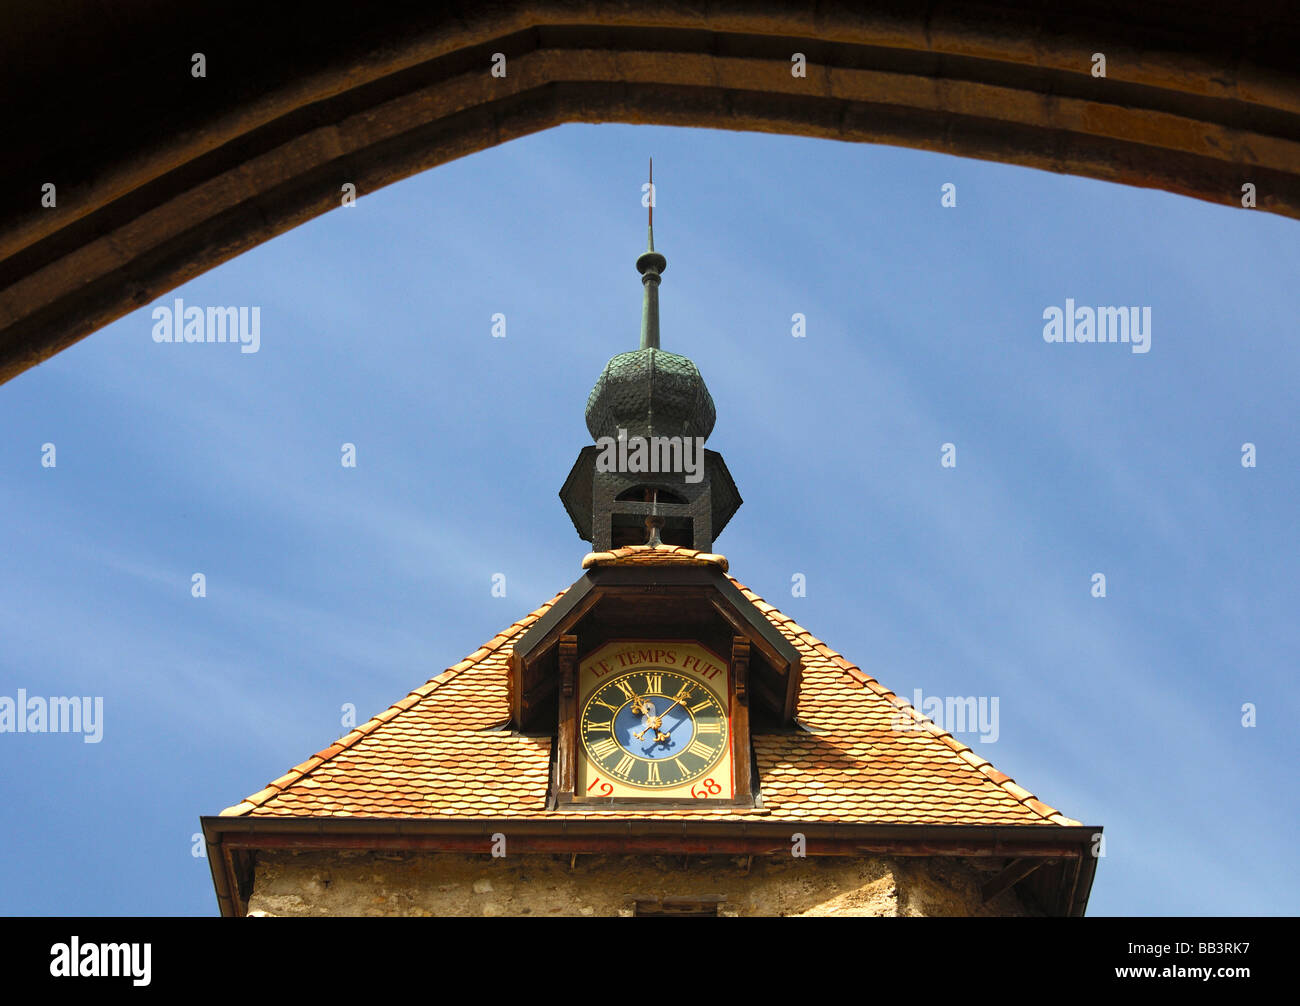 Clock tower of the Romanesque abbey of Romainmotier, canton of Vaud, Switzerland Stock Photo